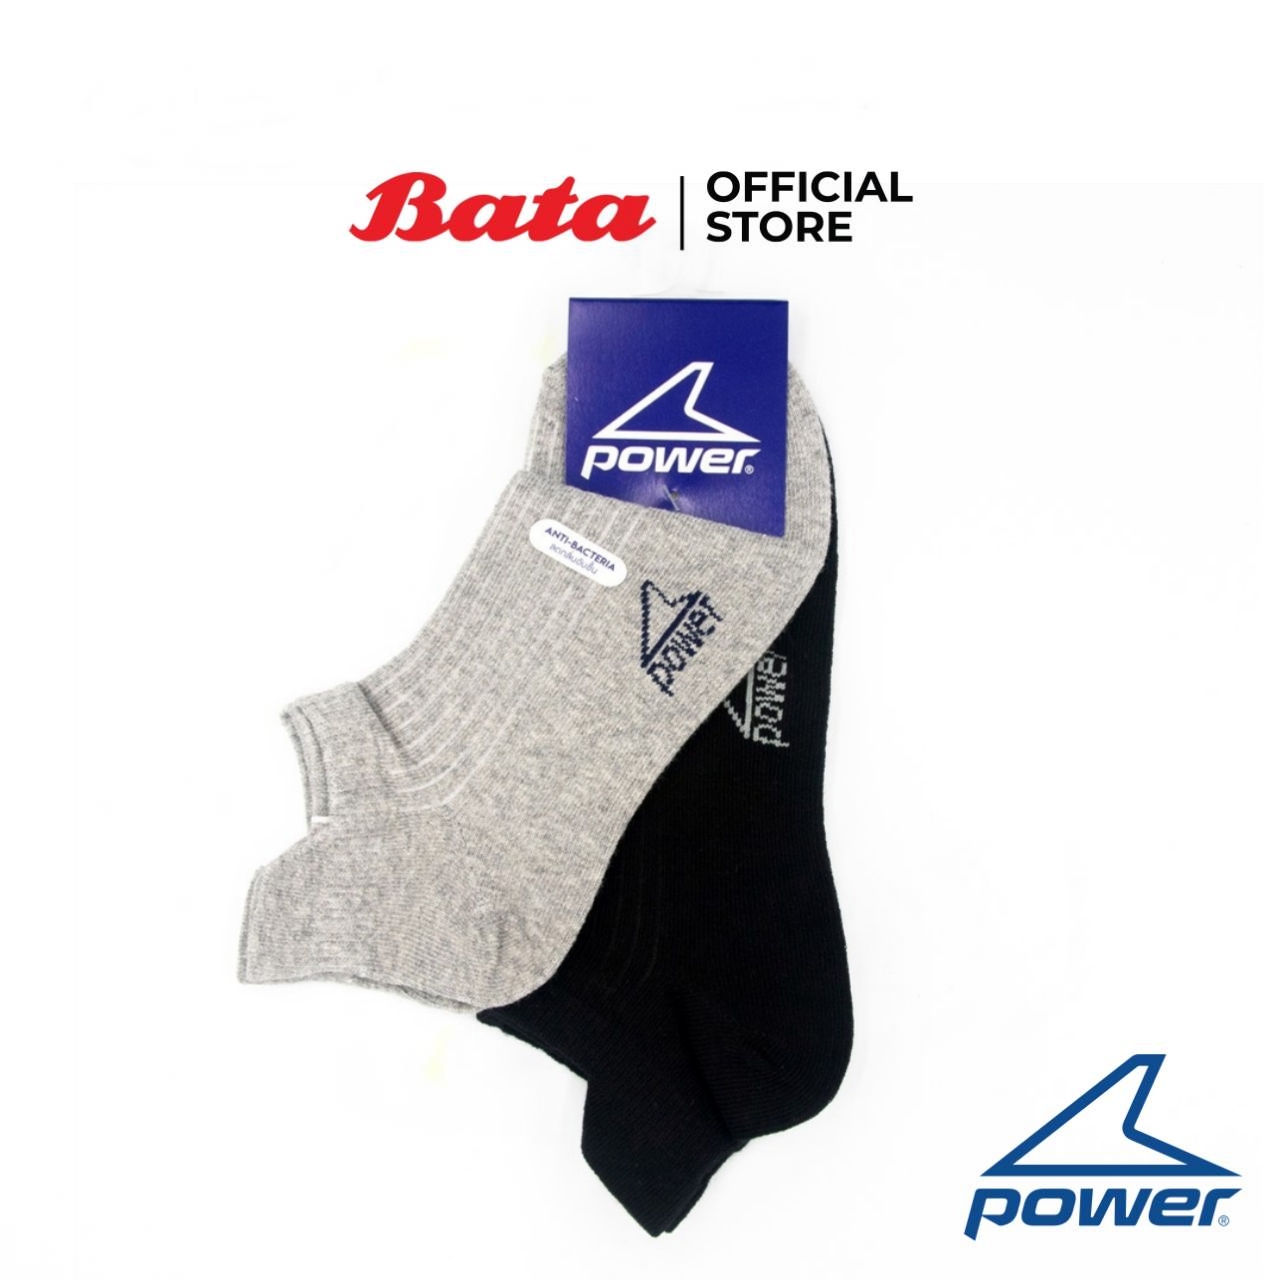 Bata Power SOCKS ถุงเท้าผู้ชาย ข้อสั้น SPORT SOCK แพ็ค 2 คู่ Freesize สีดำ-เทา คละสี รหัส 9586259 ACC